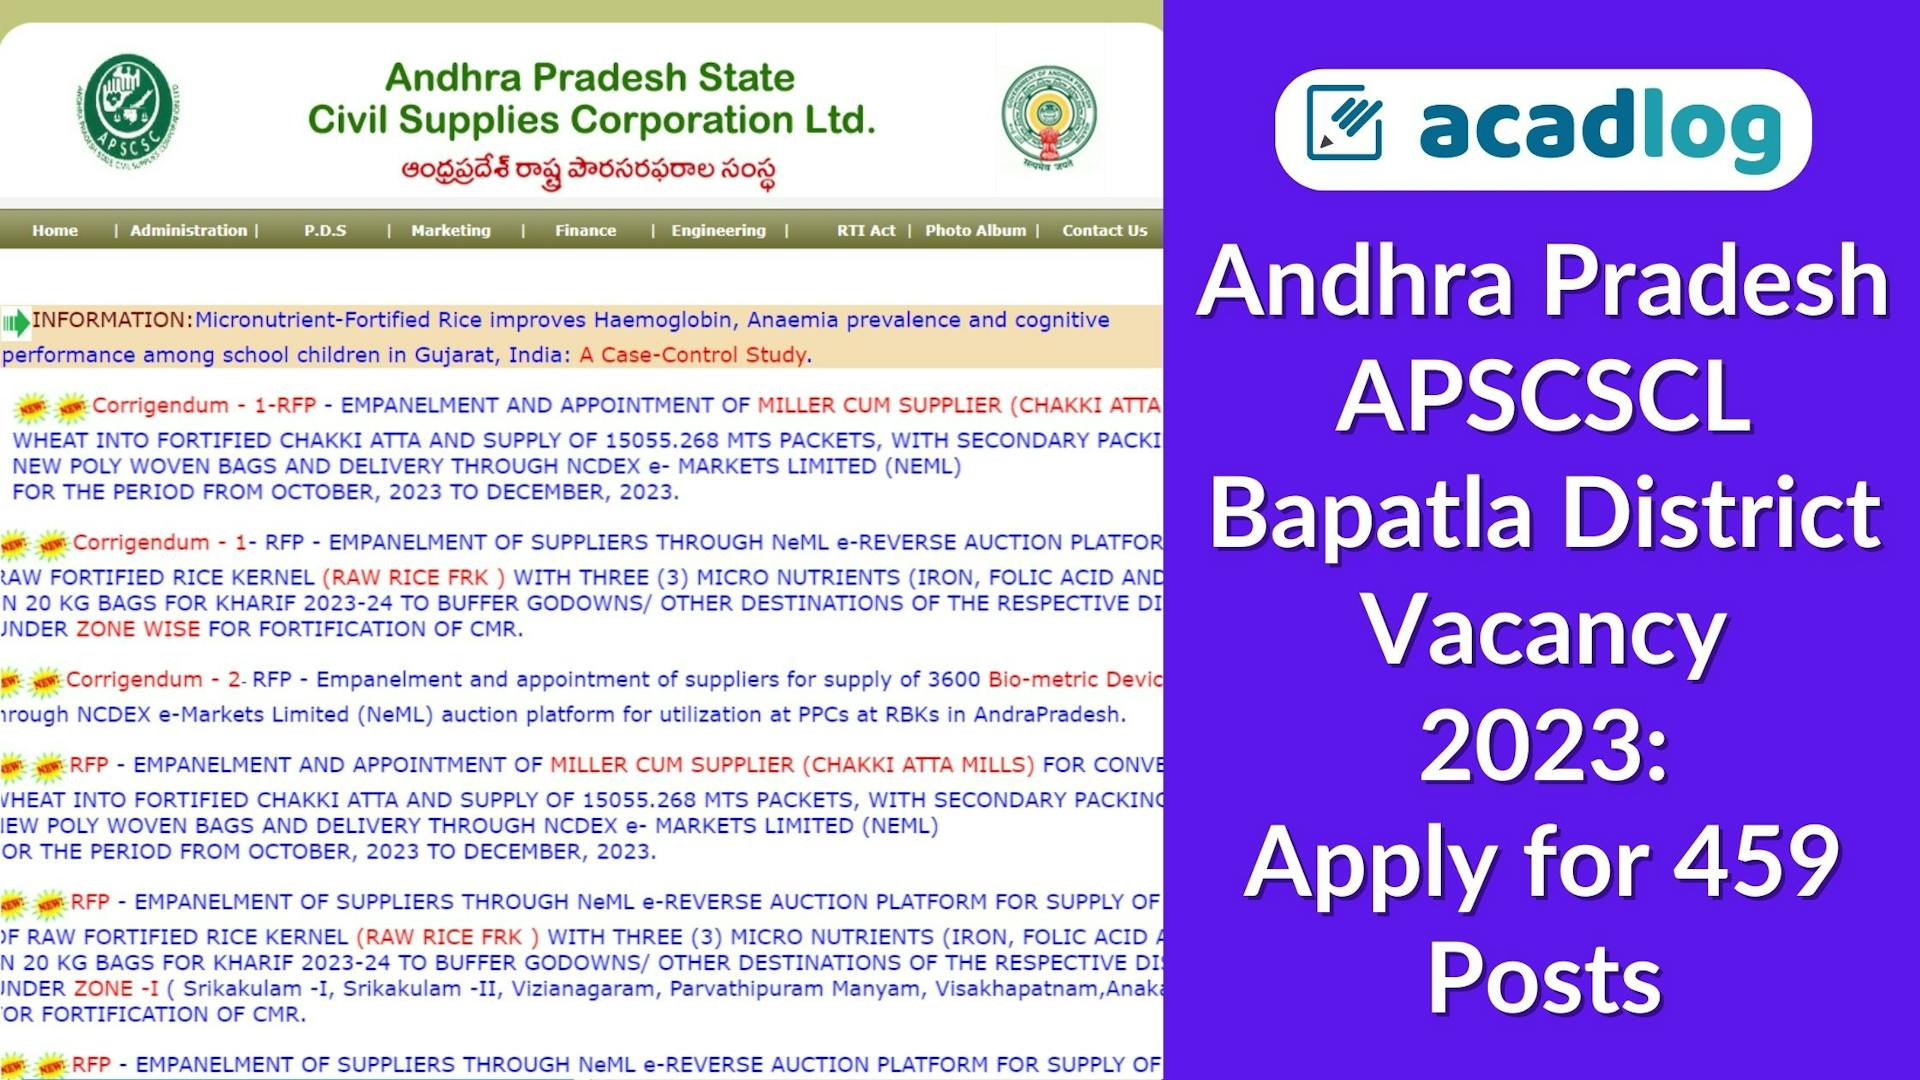 Andhra Pradesh APSCSCL Bapatla District Vacancy 2023: Apply for 459 Posts